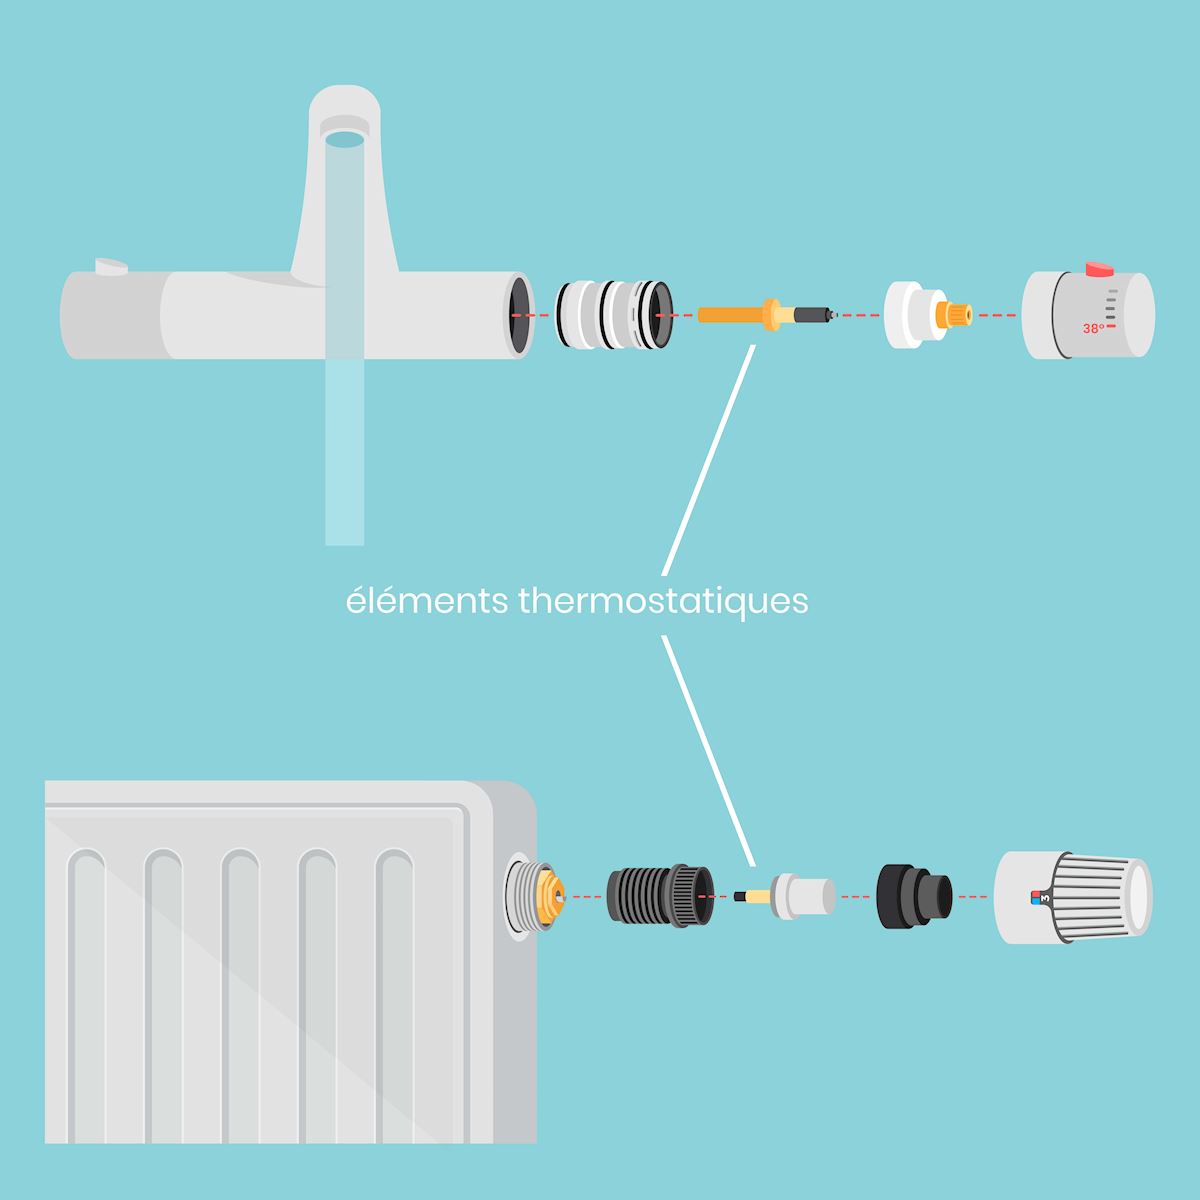 Illustration of thermostatic elements